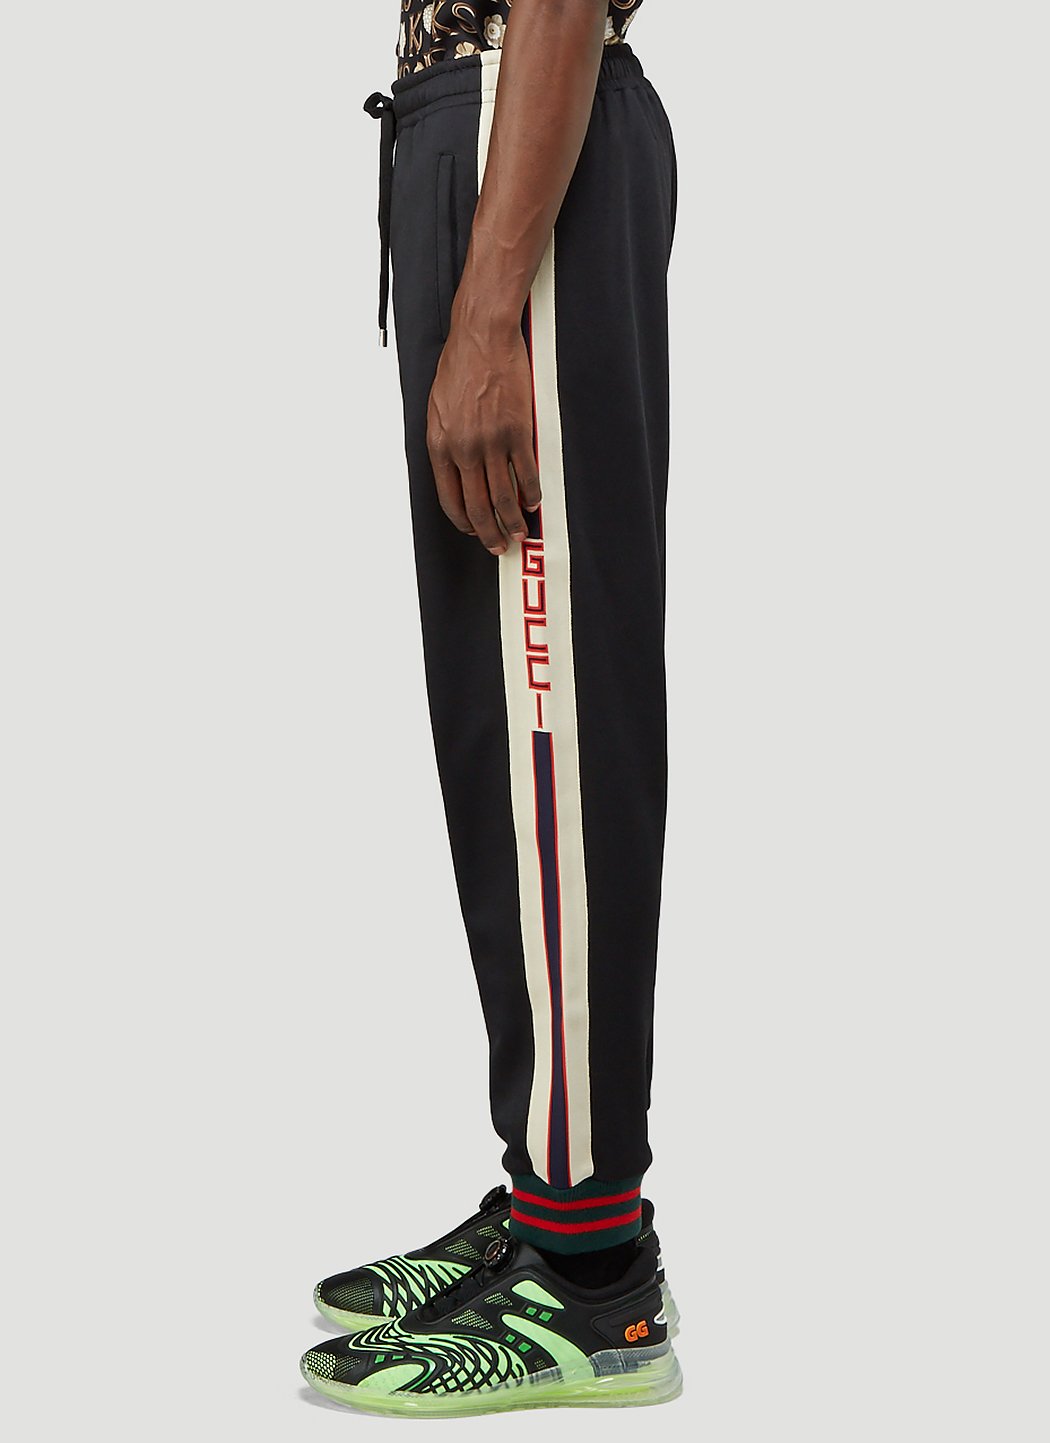 Gucci Men's Contrast-Trim Track Pants in Black | LN-CC